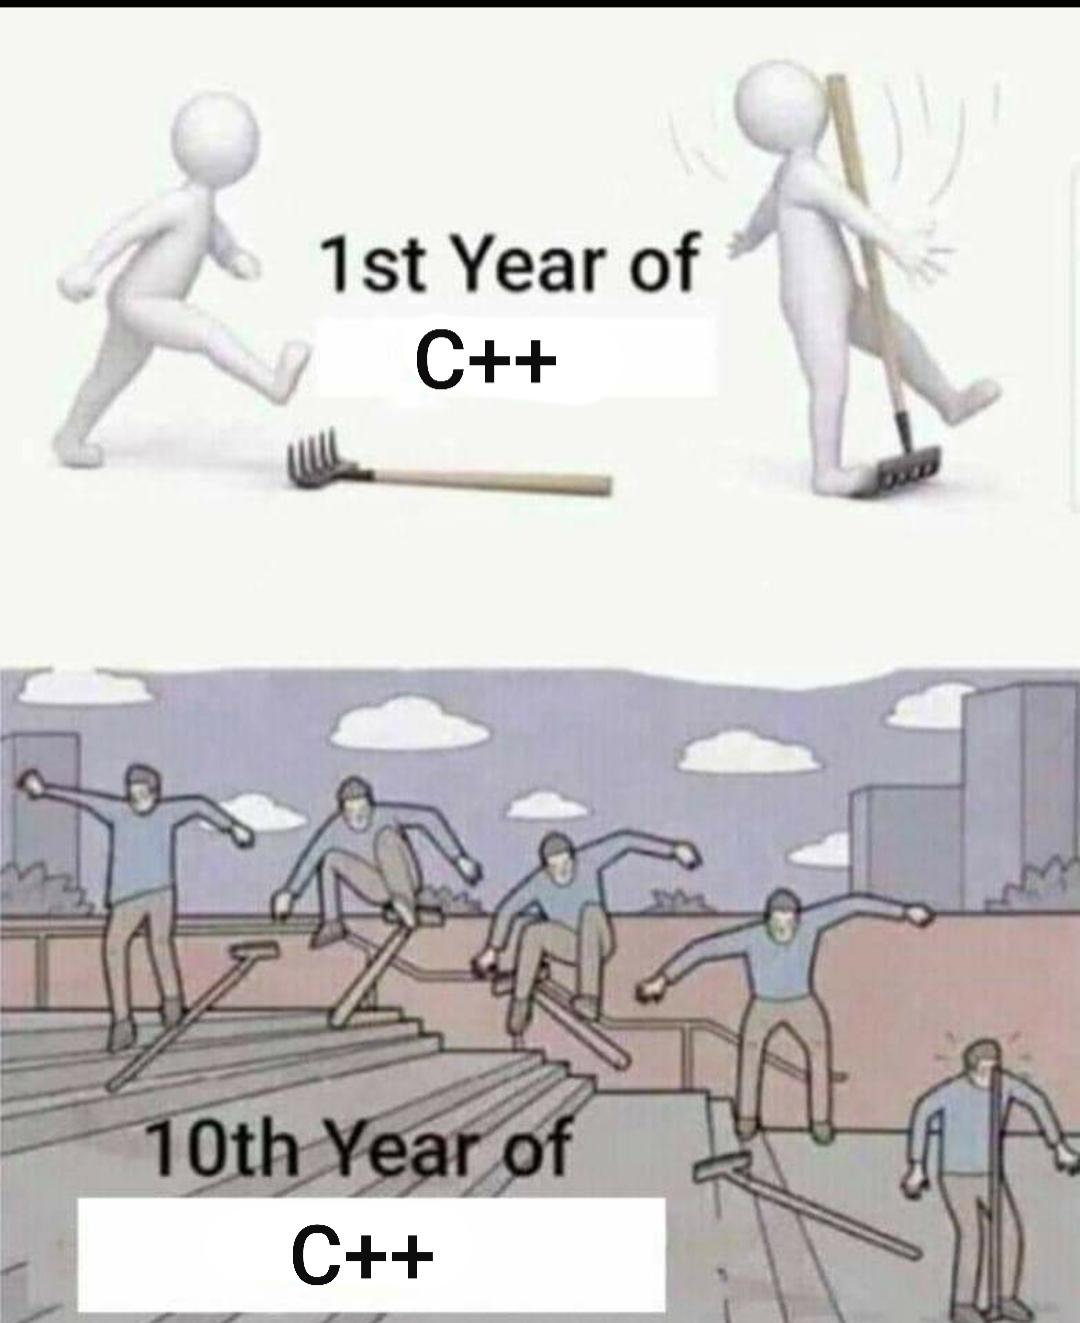 Coding C++